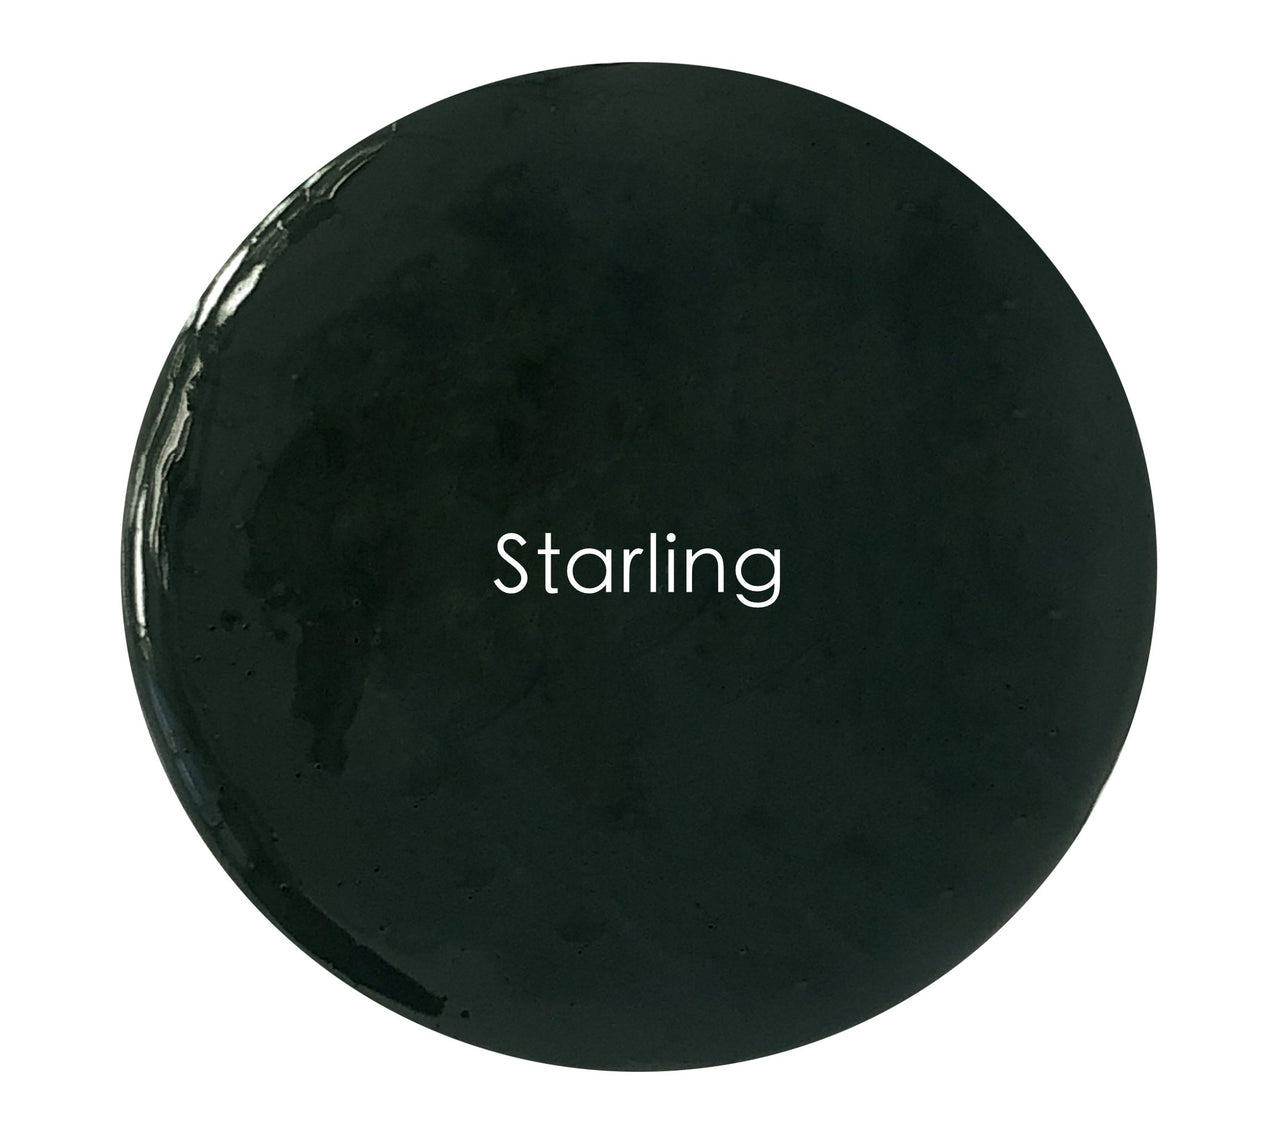 Starling - Premium Chalk Paint